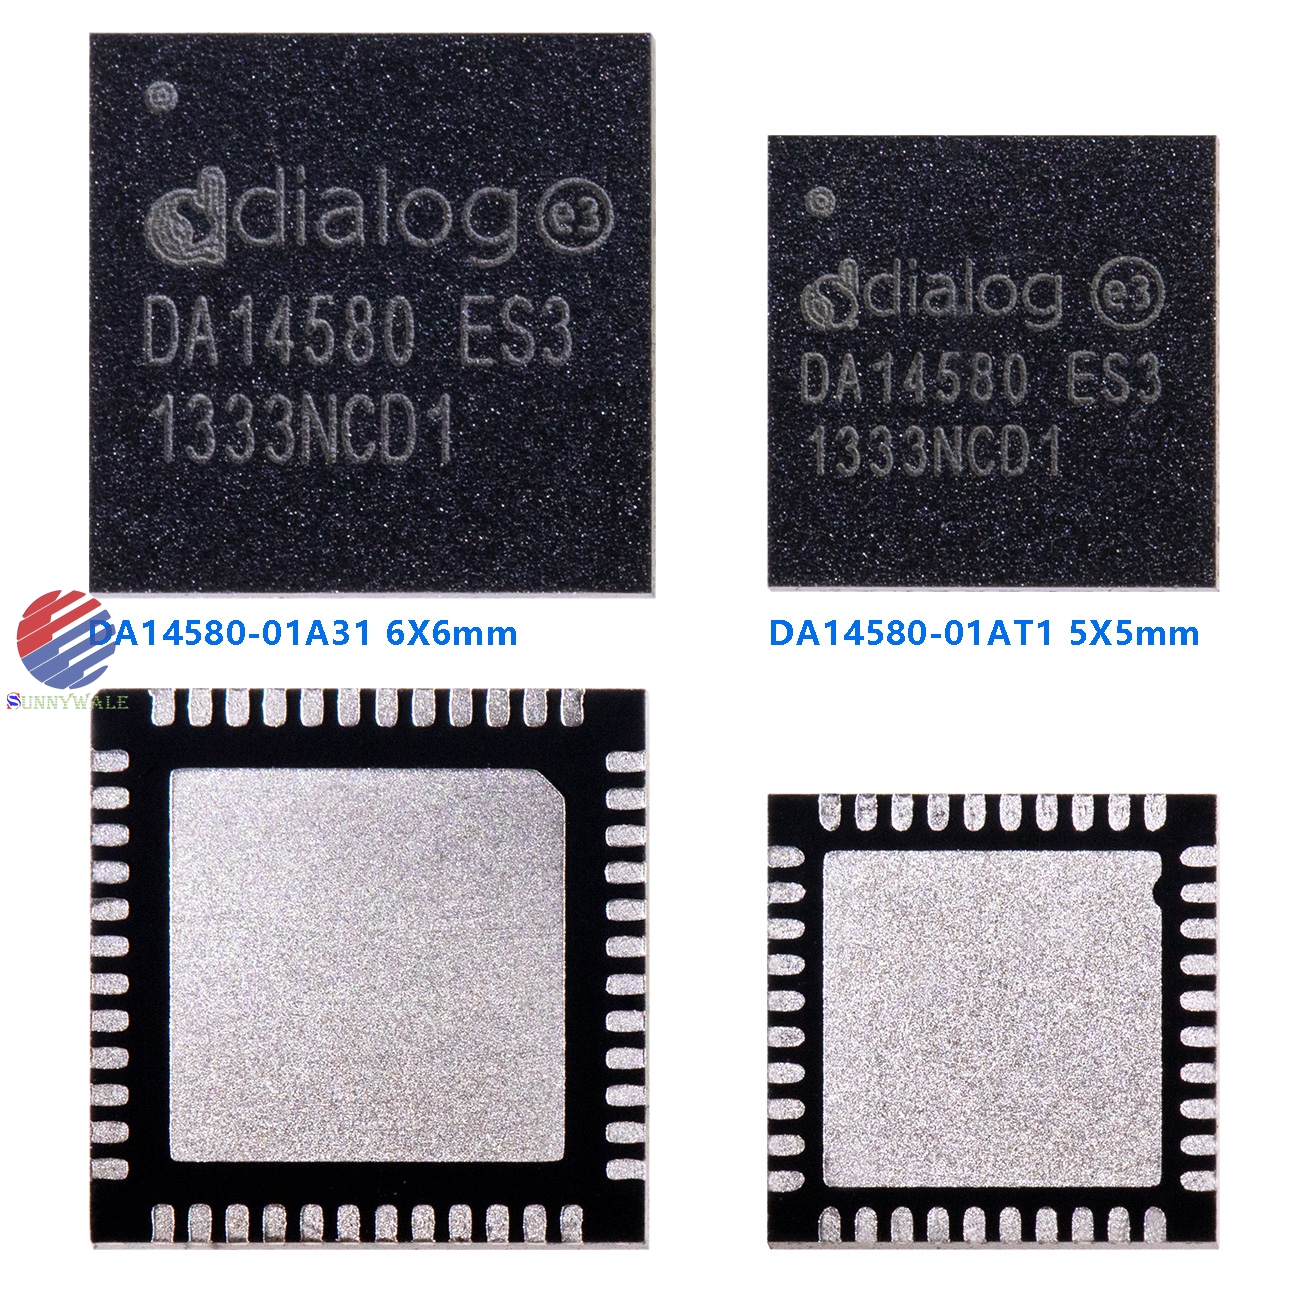 DA14580-01AT, DA14580-01A3, Dialog 2.4GHz, Bluetooth Rev4.2 standard IC, 2.4G wireless transceiver, 2.4G Bluetooth chip, Bluetooth mobile portable terminal device，Bluetooth communication connection